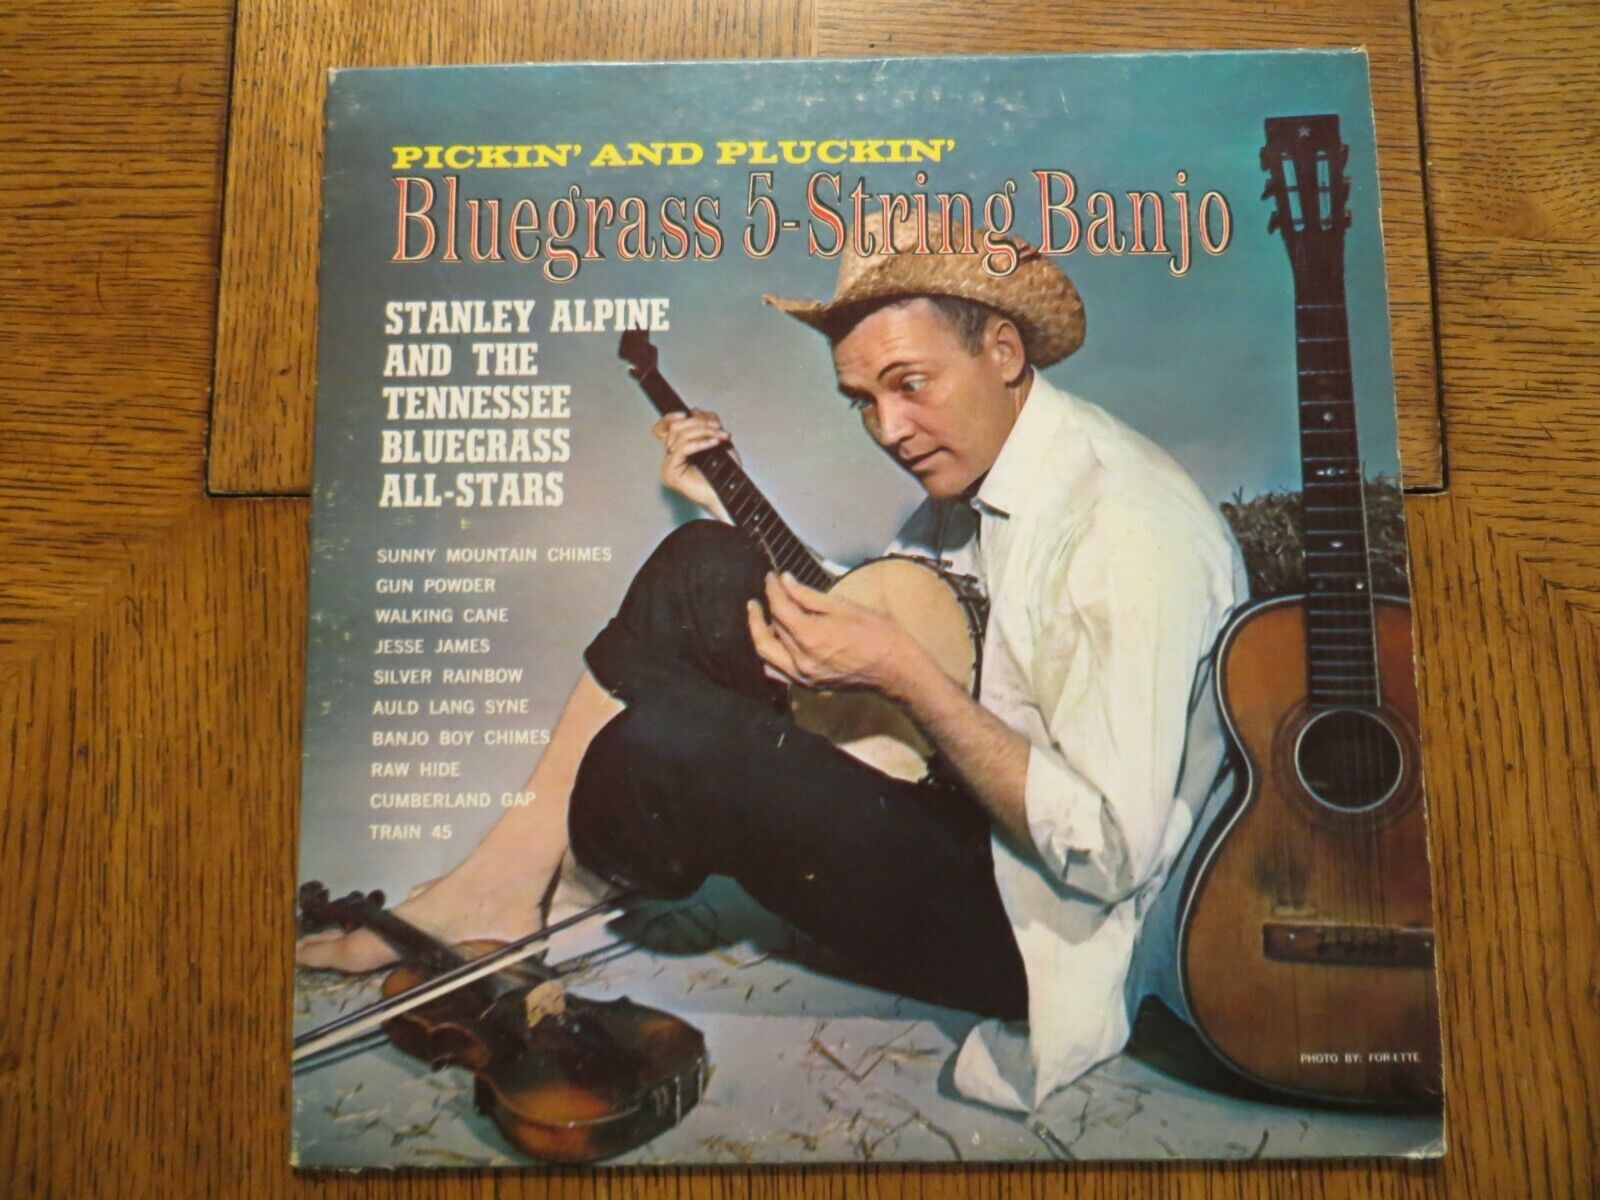 Stanley Alpine & The Tennessee Bluegrass All-Stars – Bluegrass 5-String Banjo